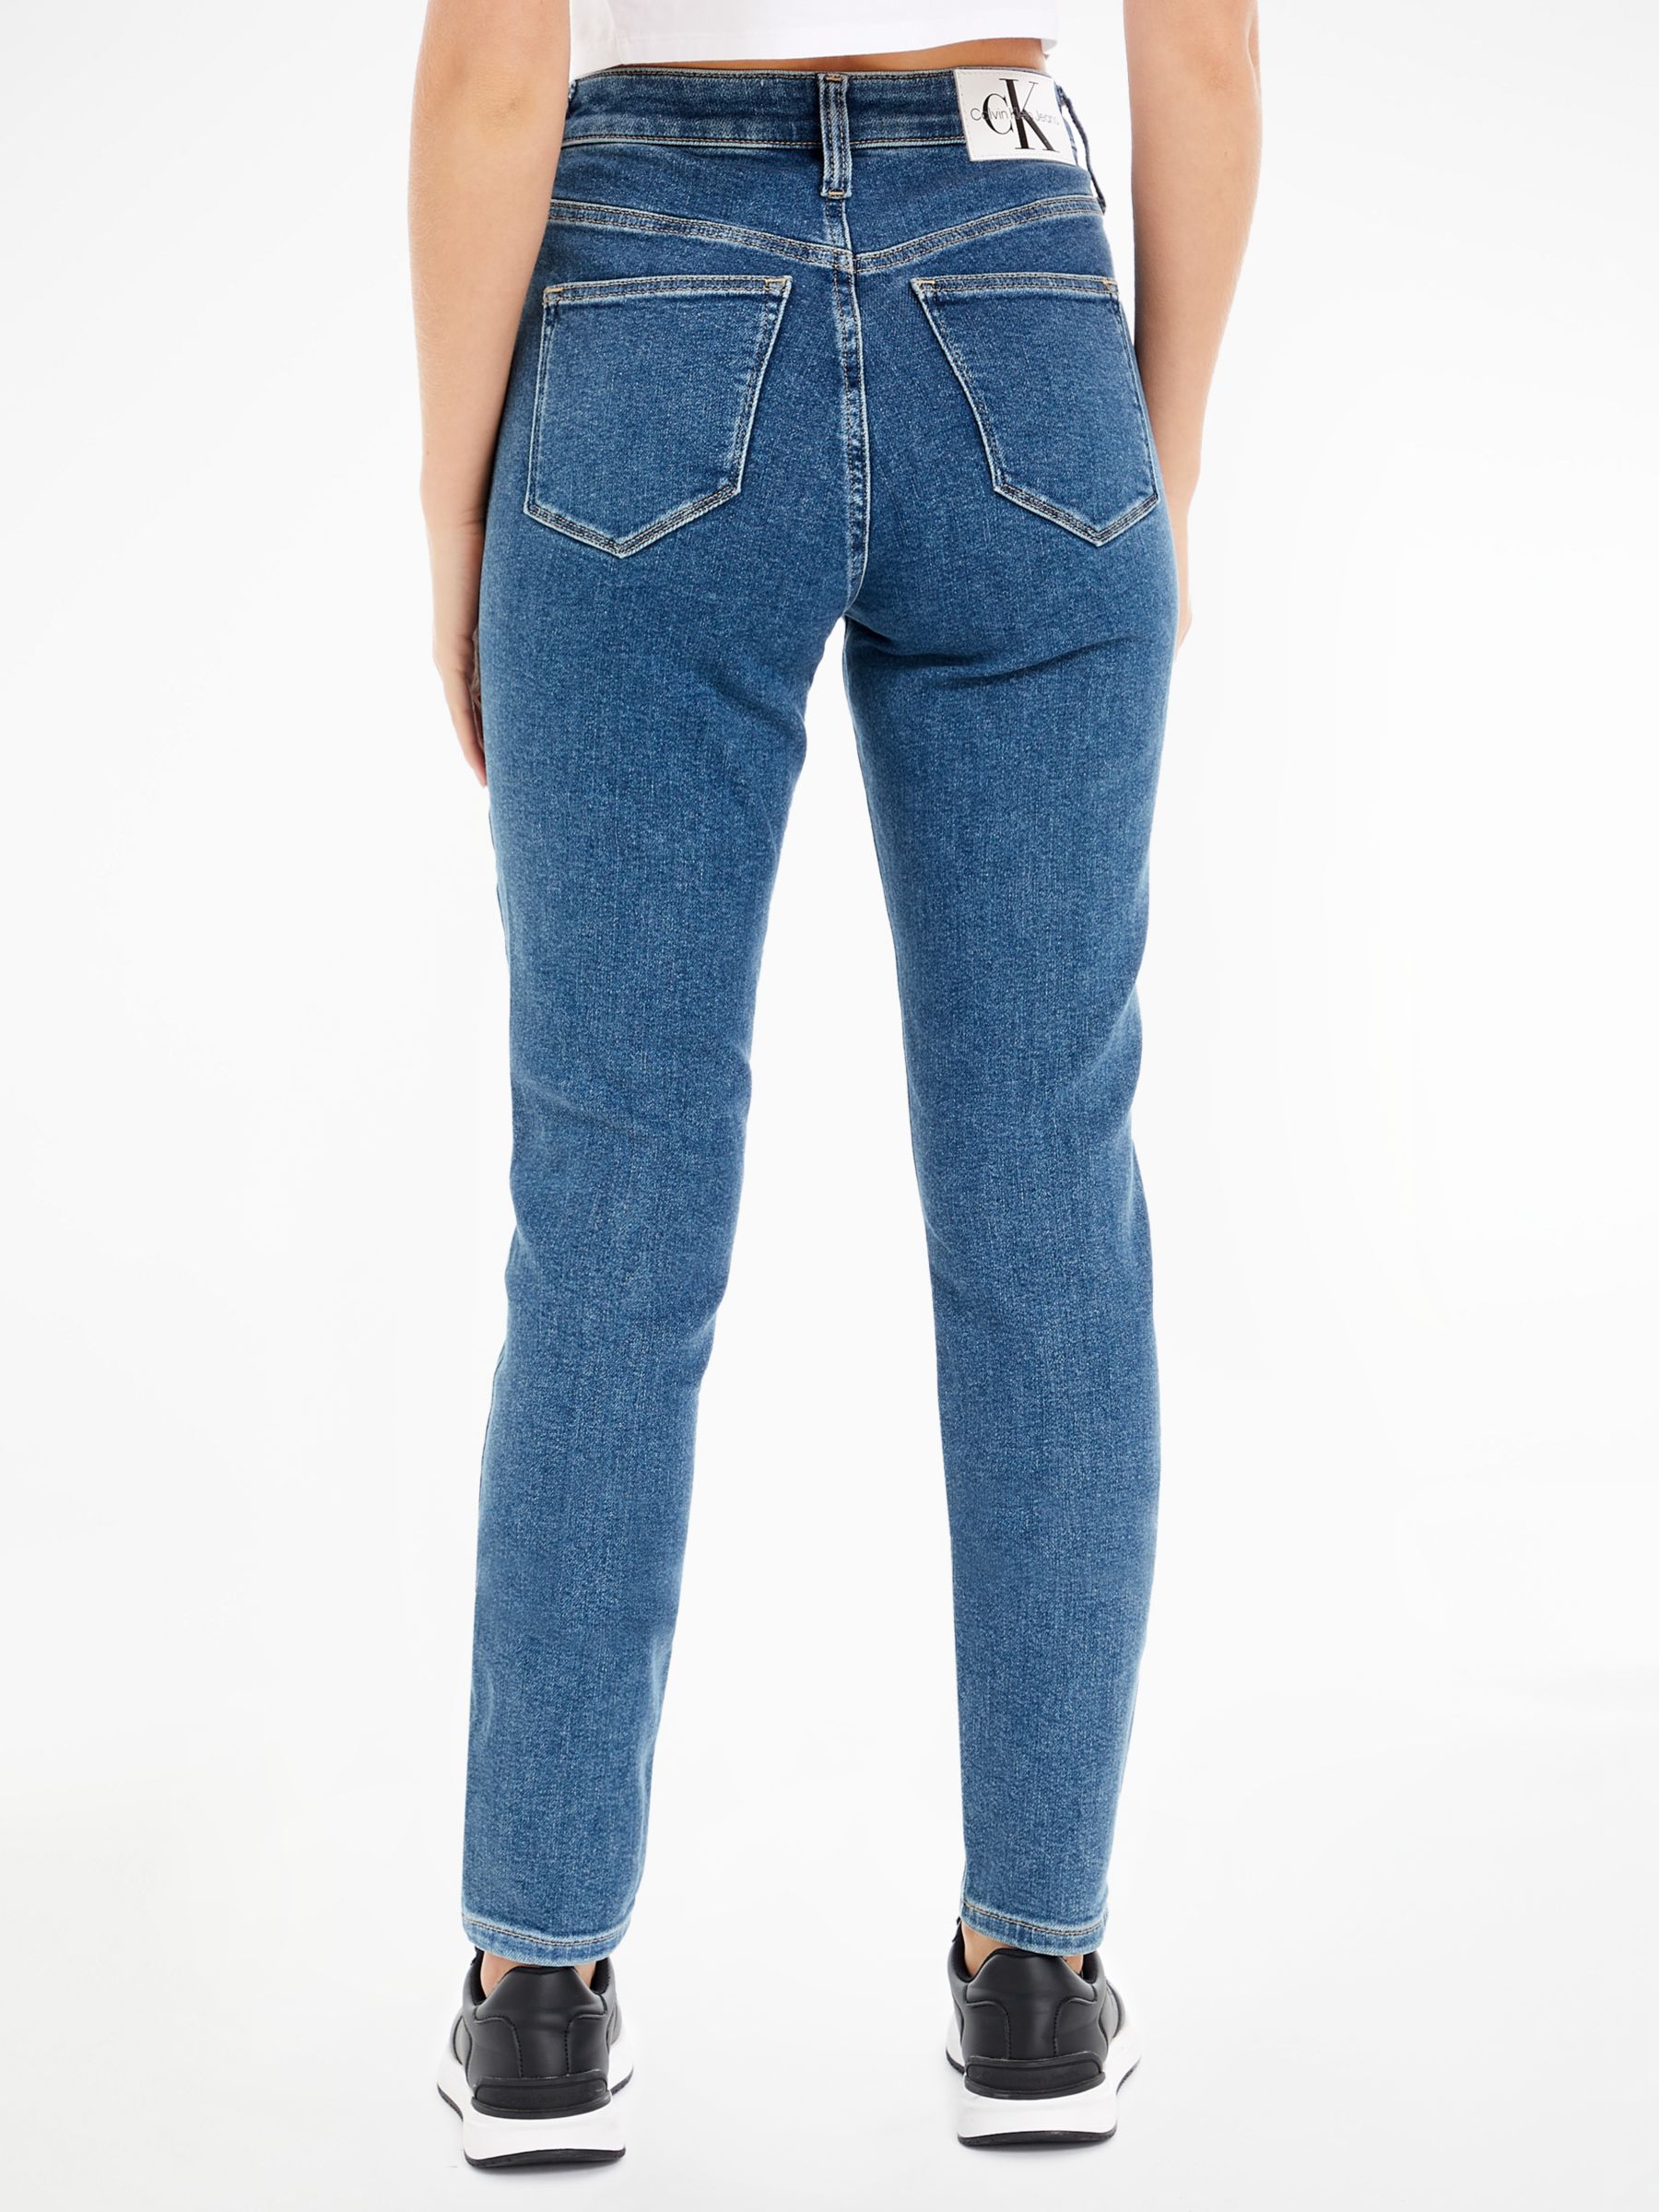 Calvin Klein High Rise Skinny Jeans, Medium Blue, 24S